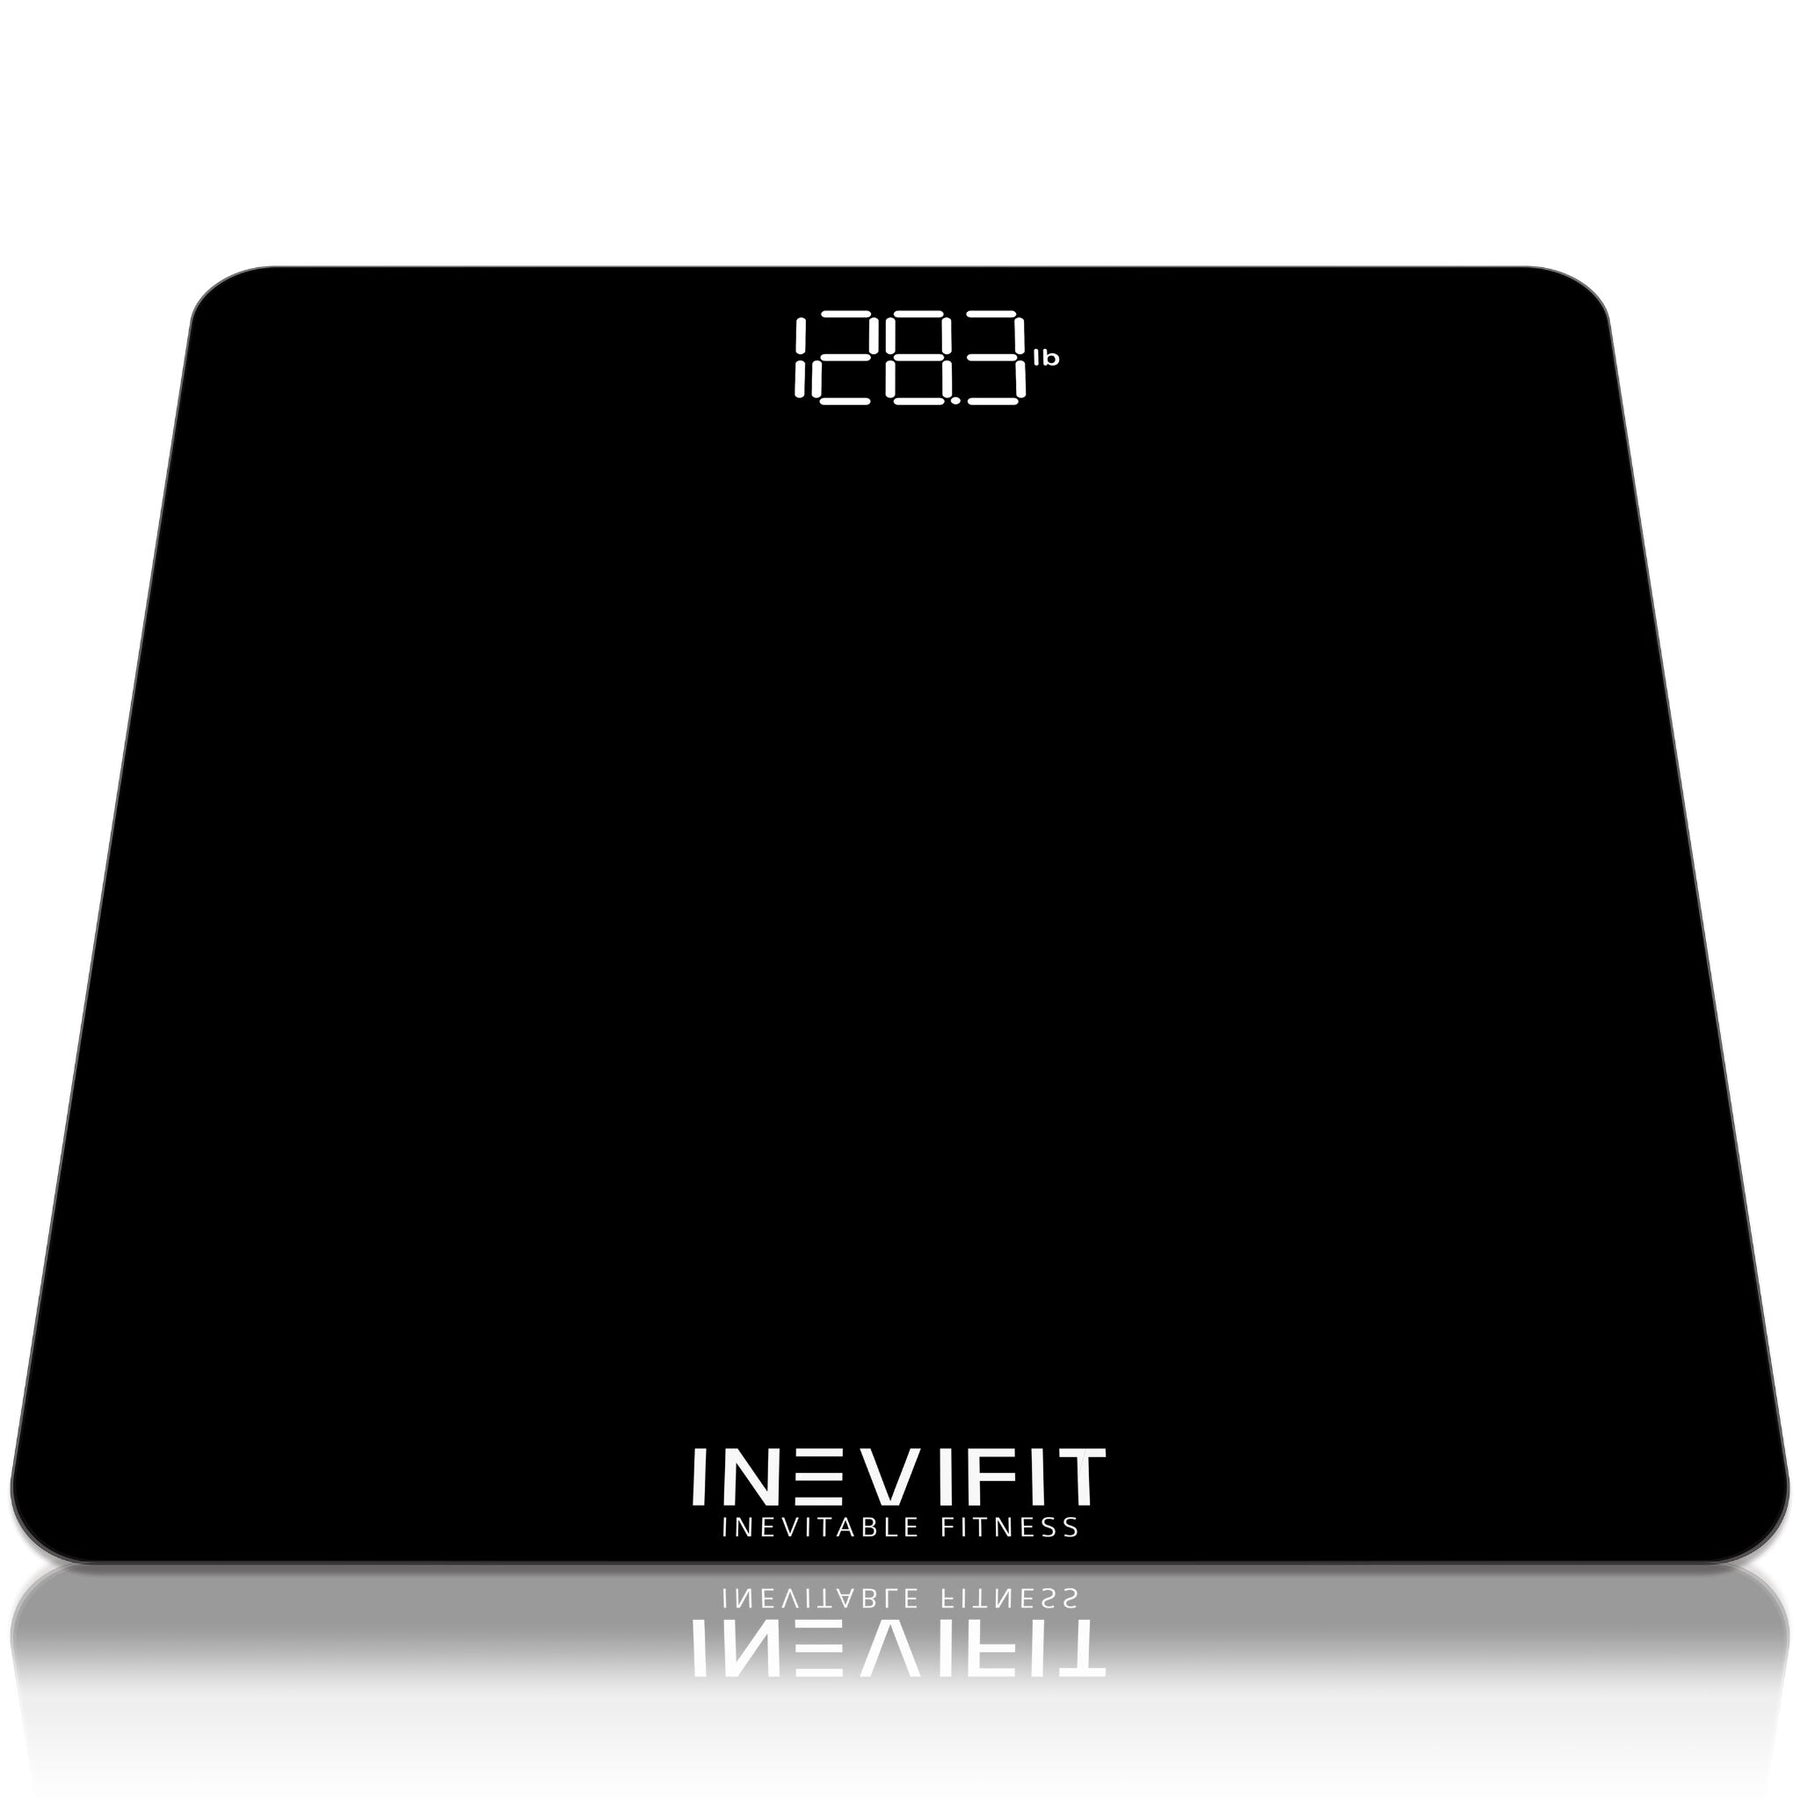 Smart Body Fat Scale I-BF003 Series